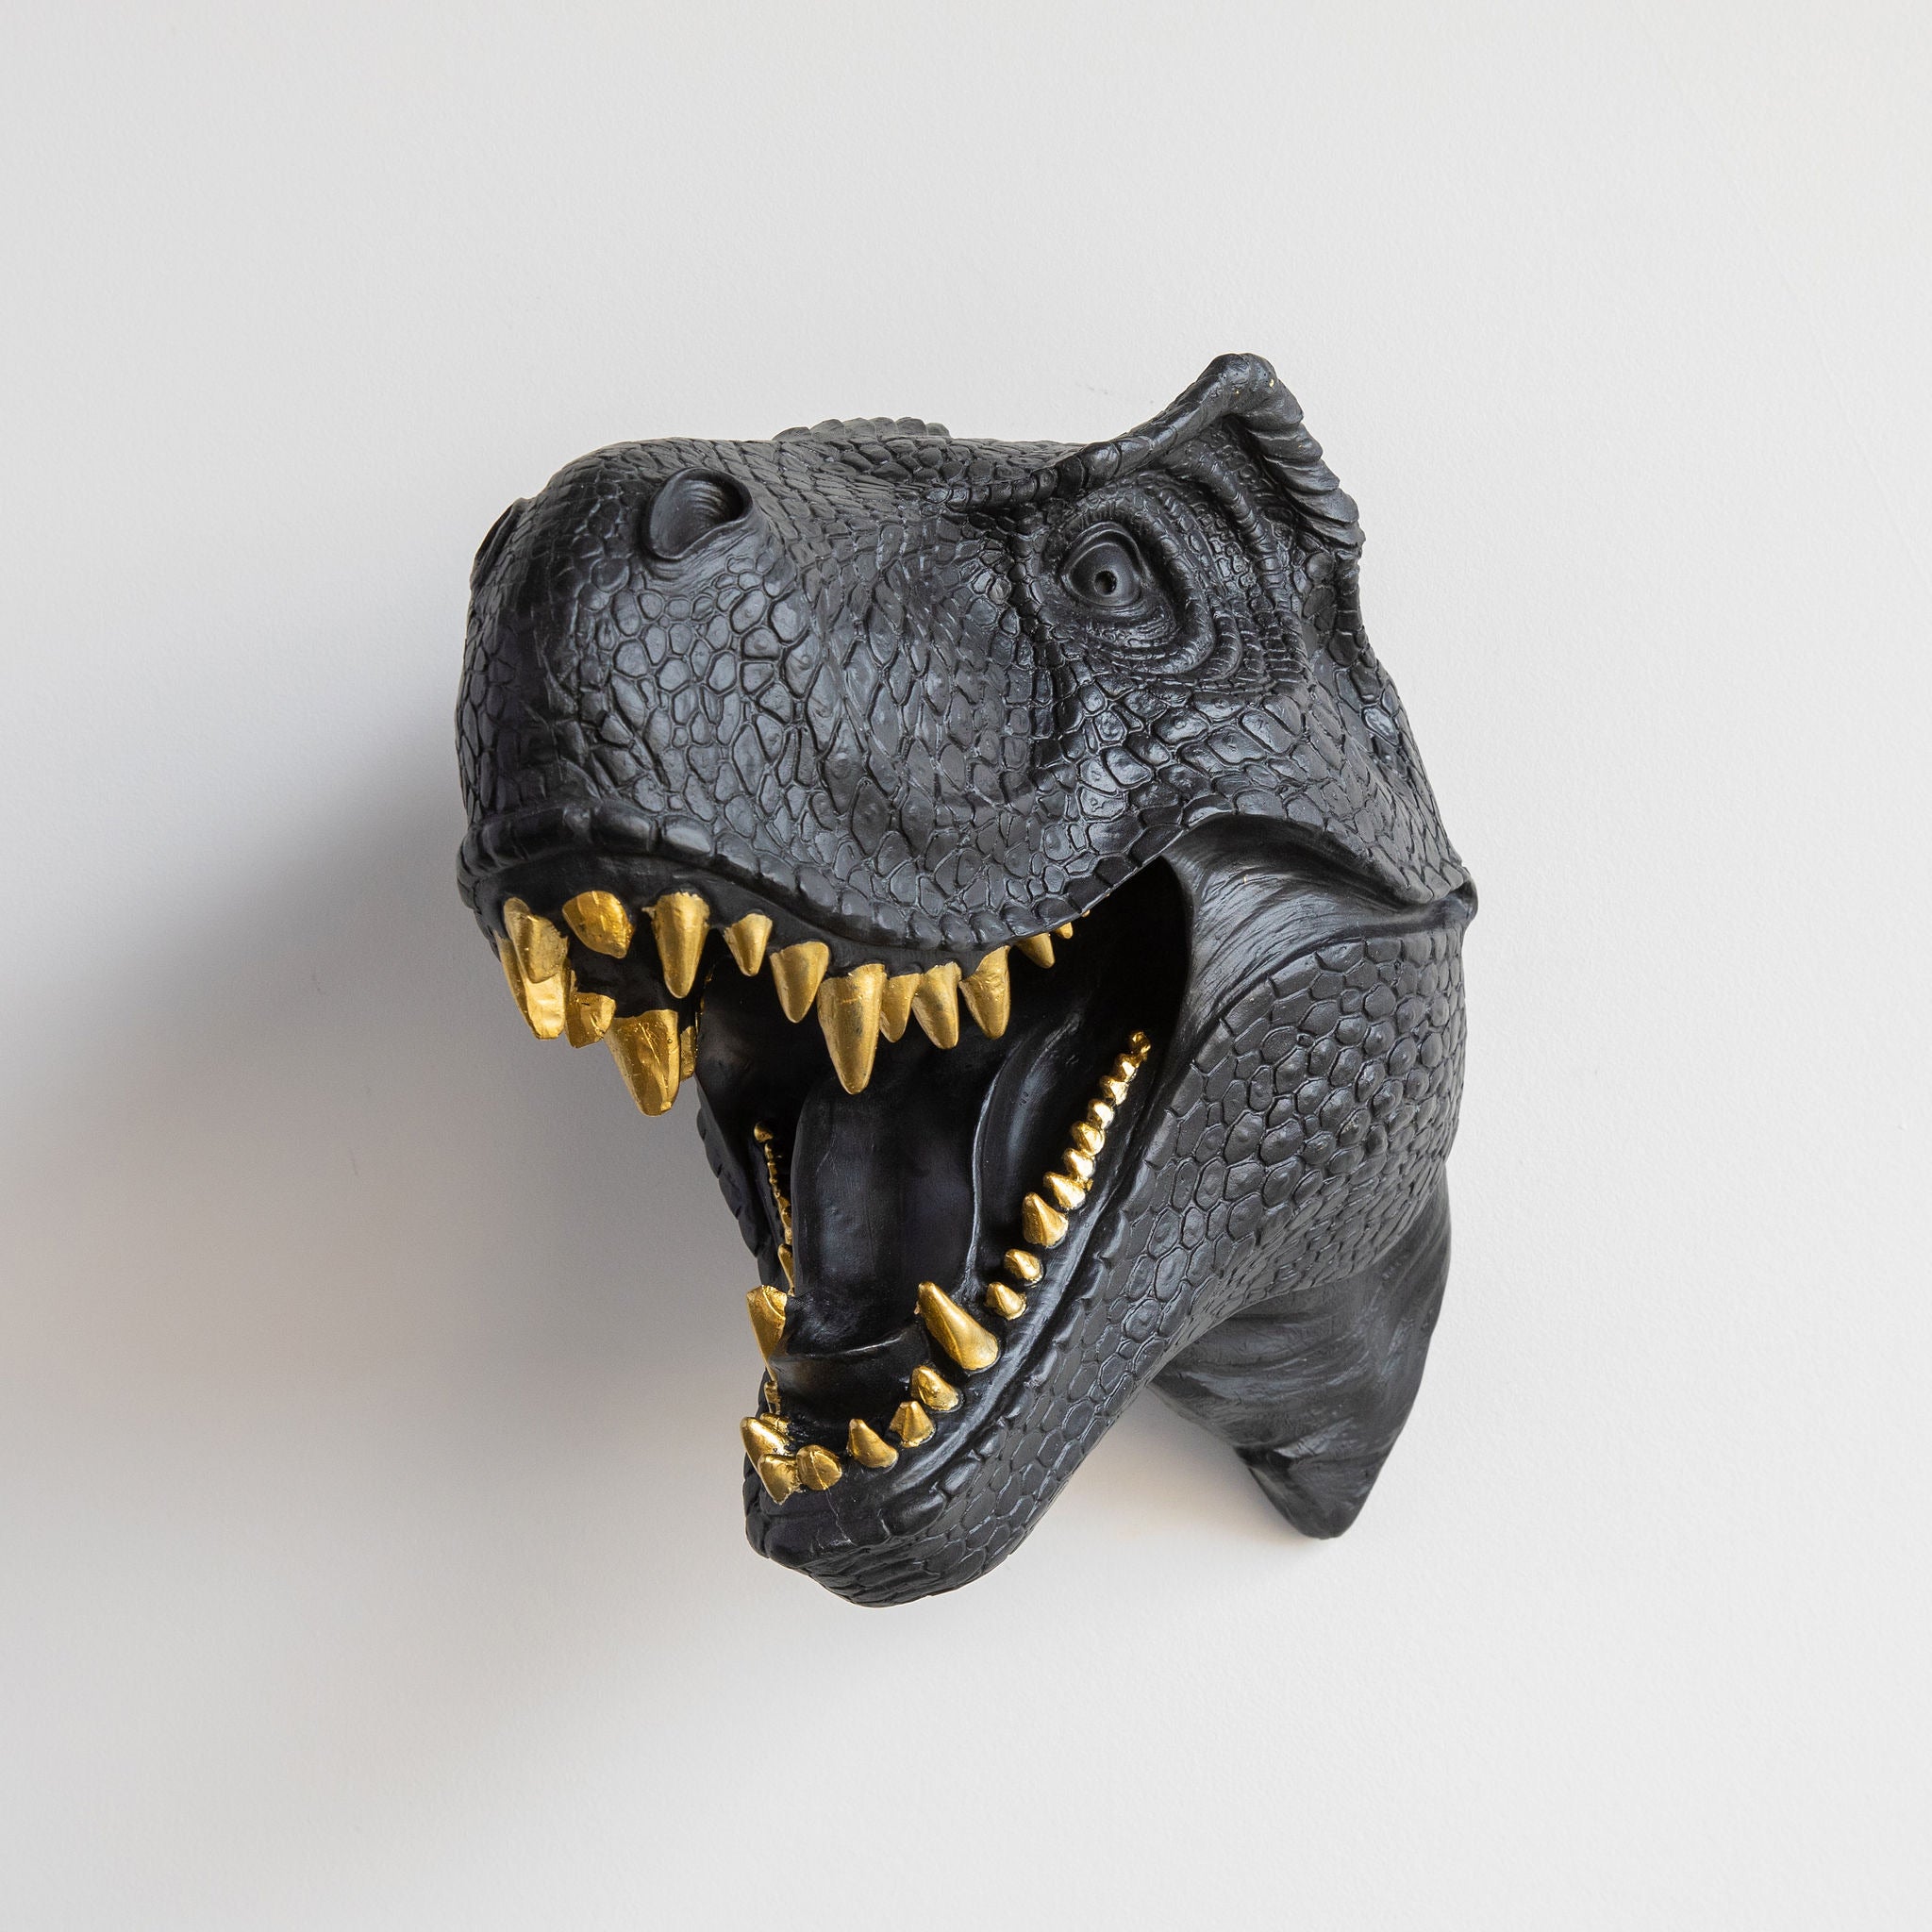 T-Rex Dinosaur Head Wall Mount // Black with Gold Teeth